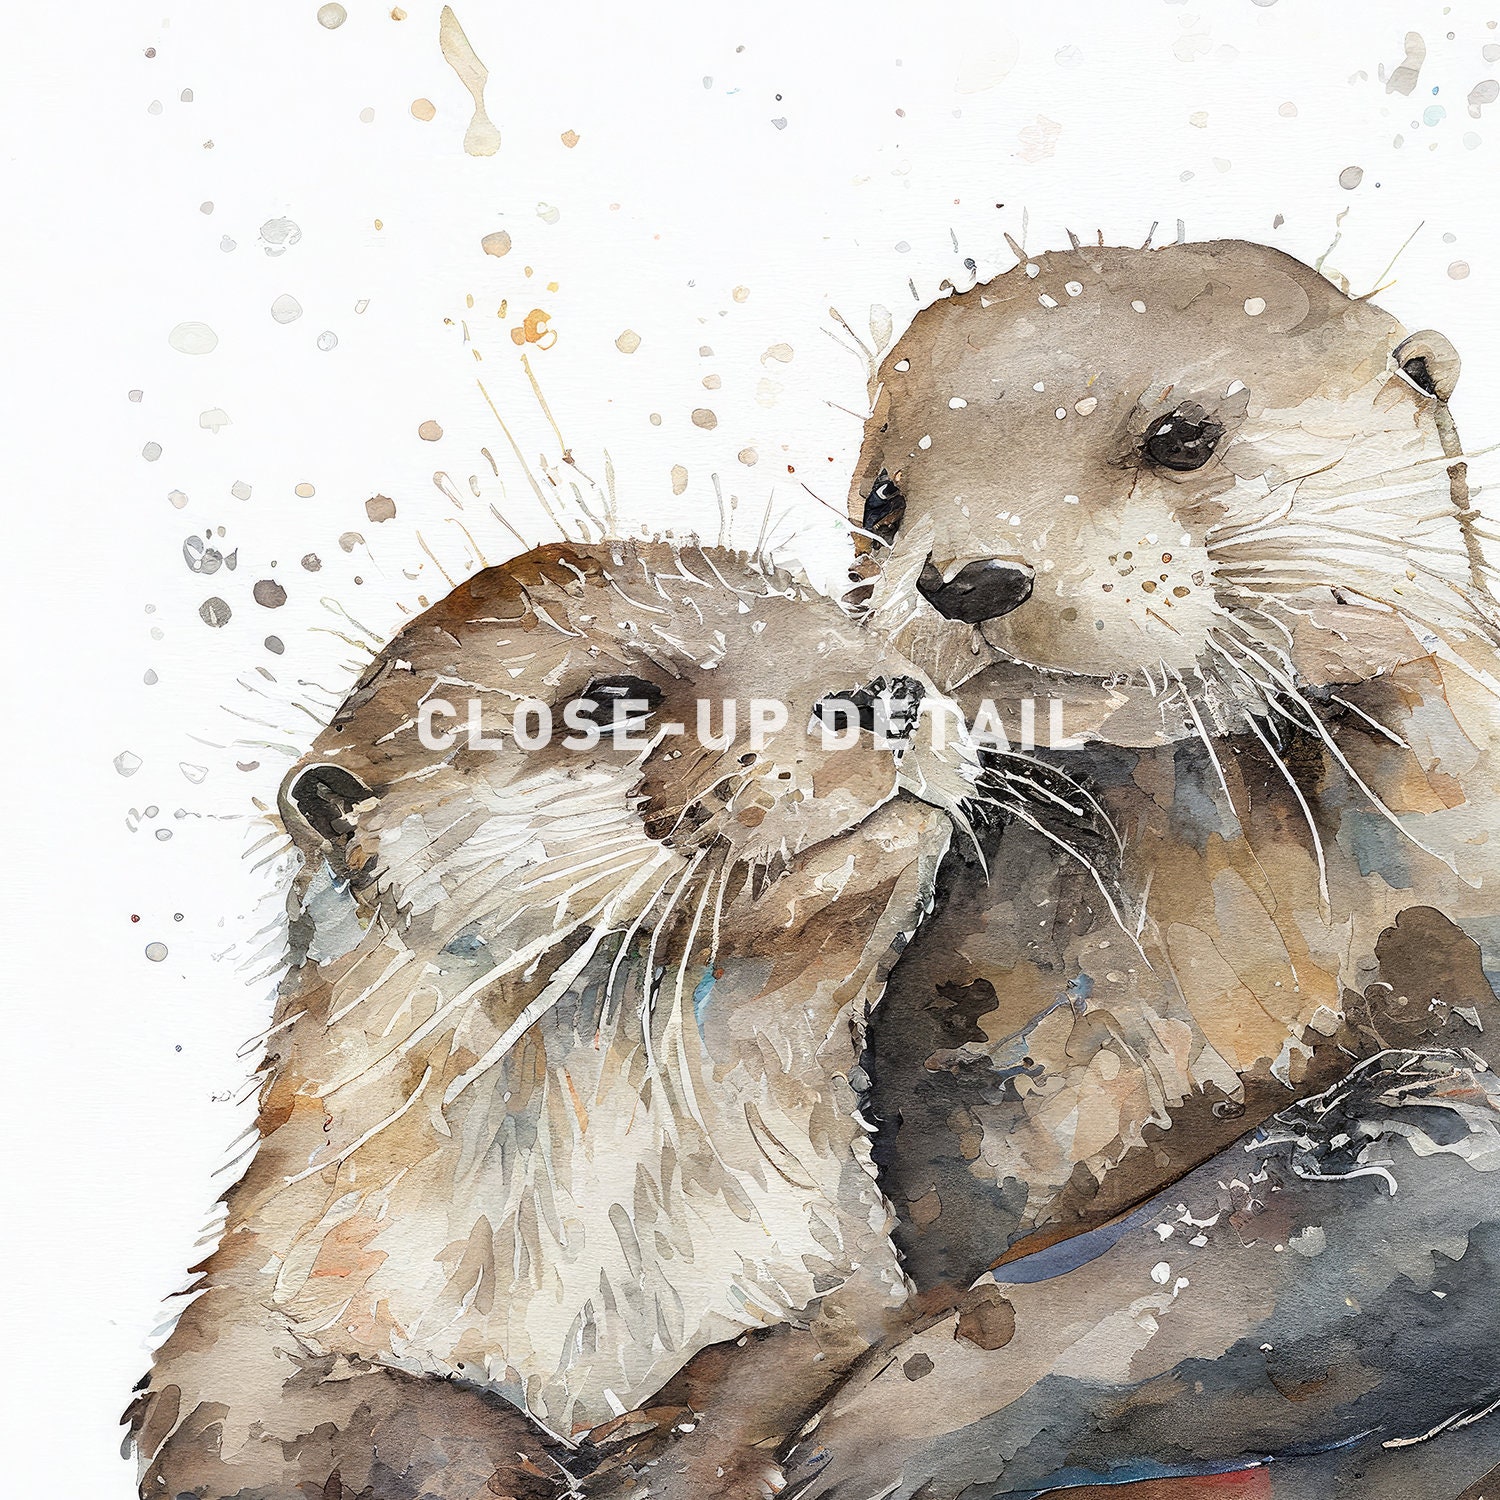 Discover Otter Couple Watercolor Wall Art Print | My Otter Half Decor | Adorable Animal Nursery Wall Poster, No Frame